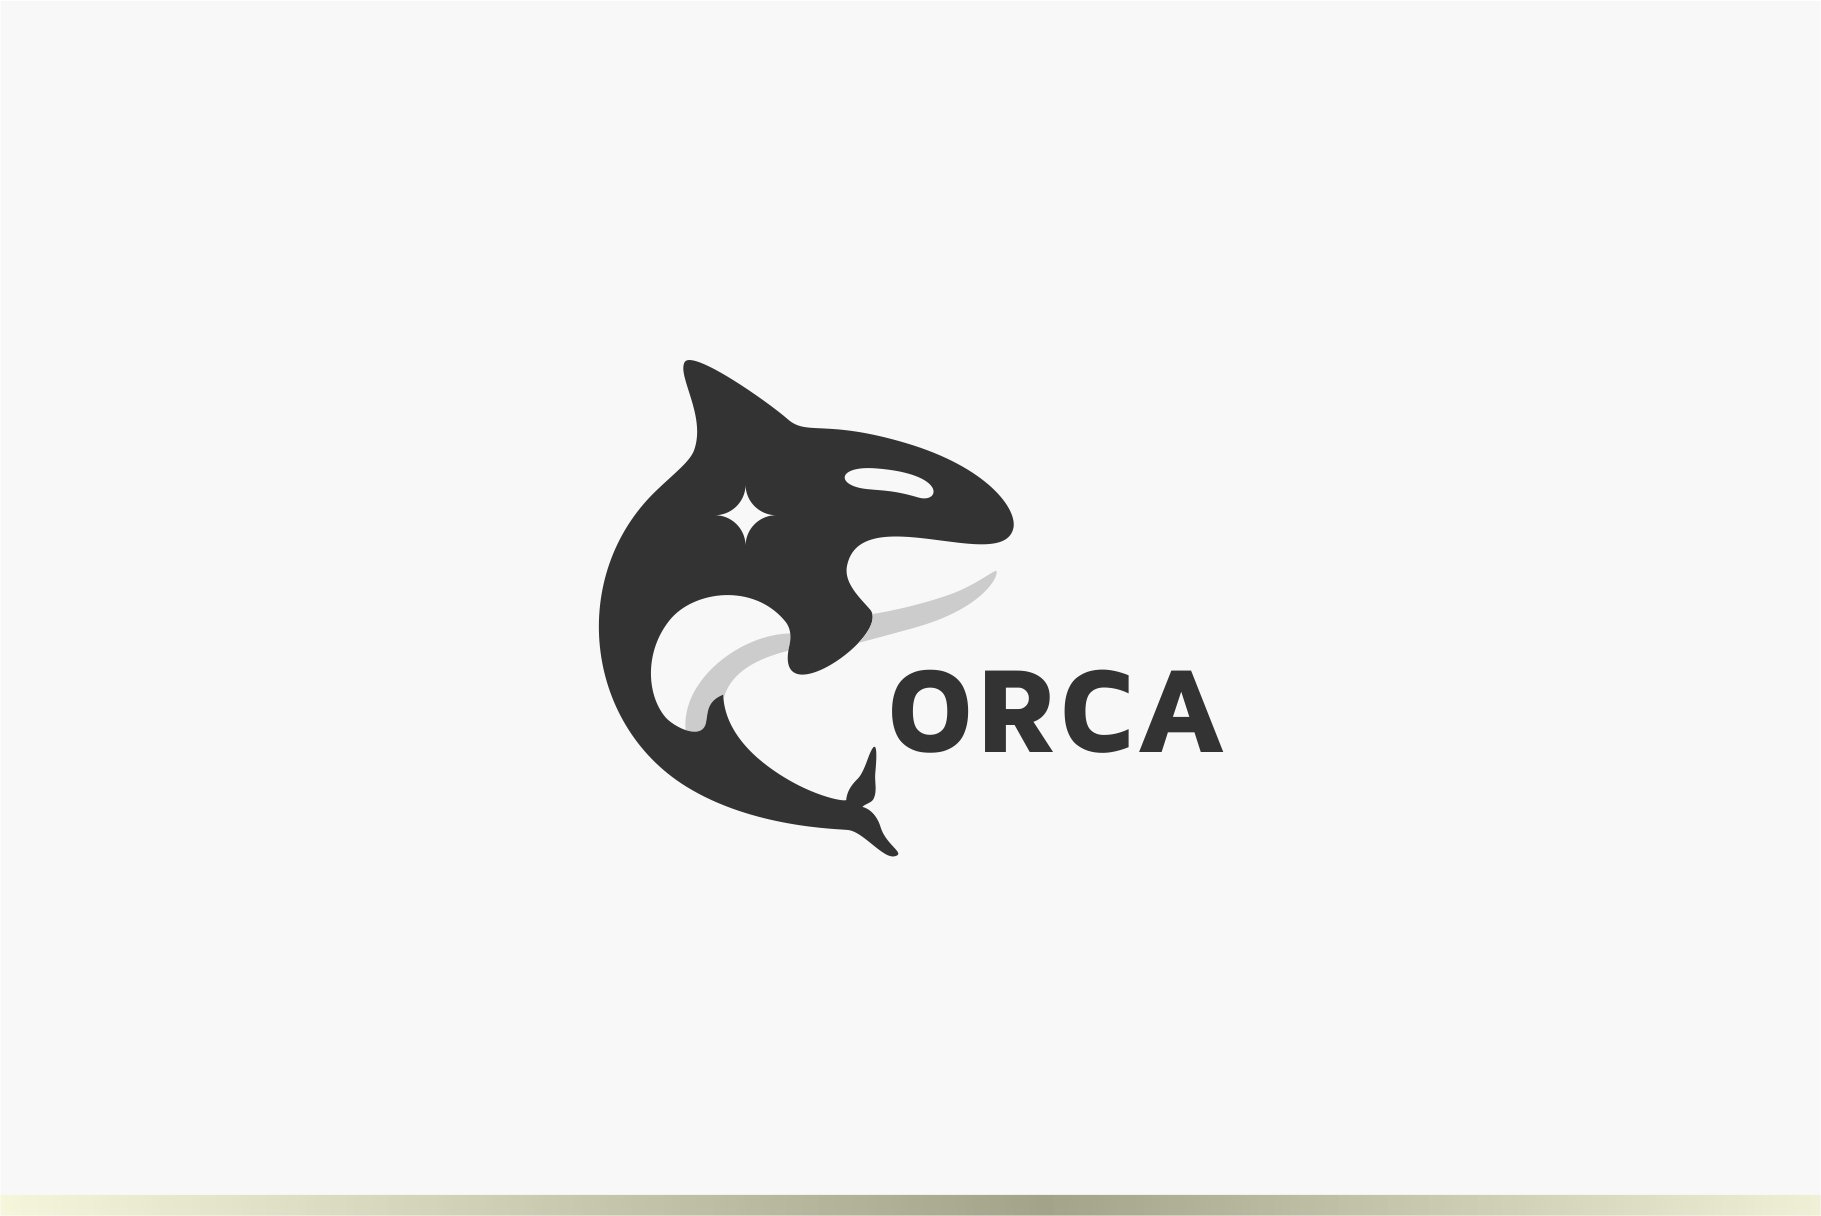 Orca Logo cover image.